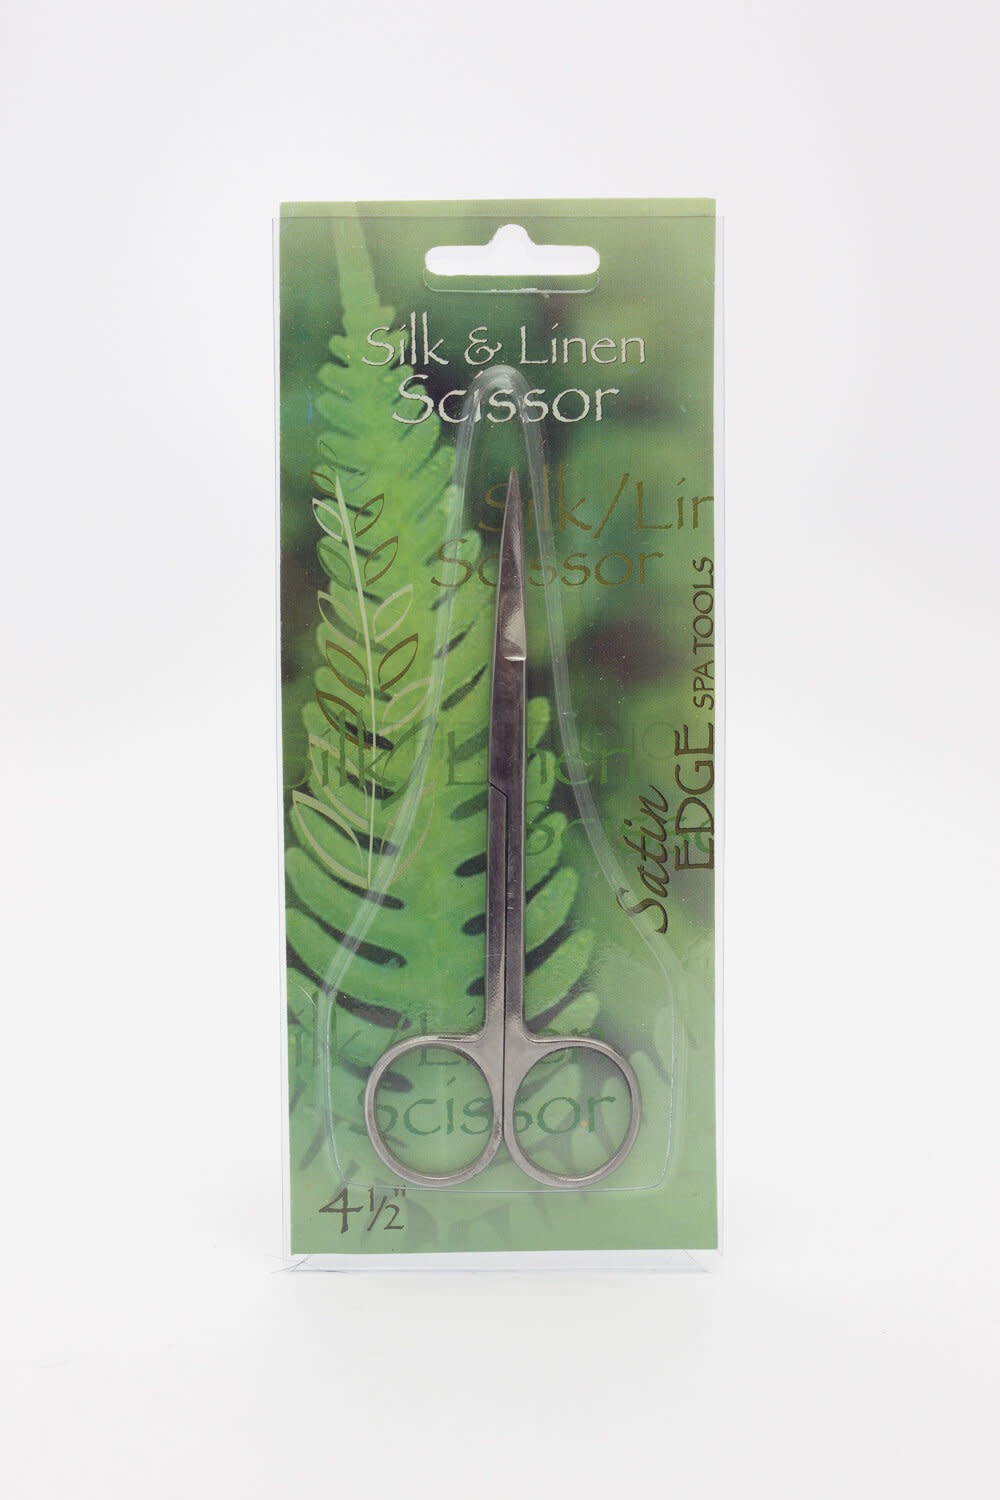 Satin Edge - Eyebrow Scissors (SE-2081) - Silver - The Studio - Nail and  Beauty Supply